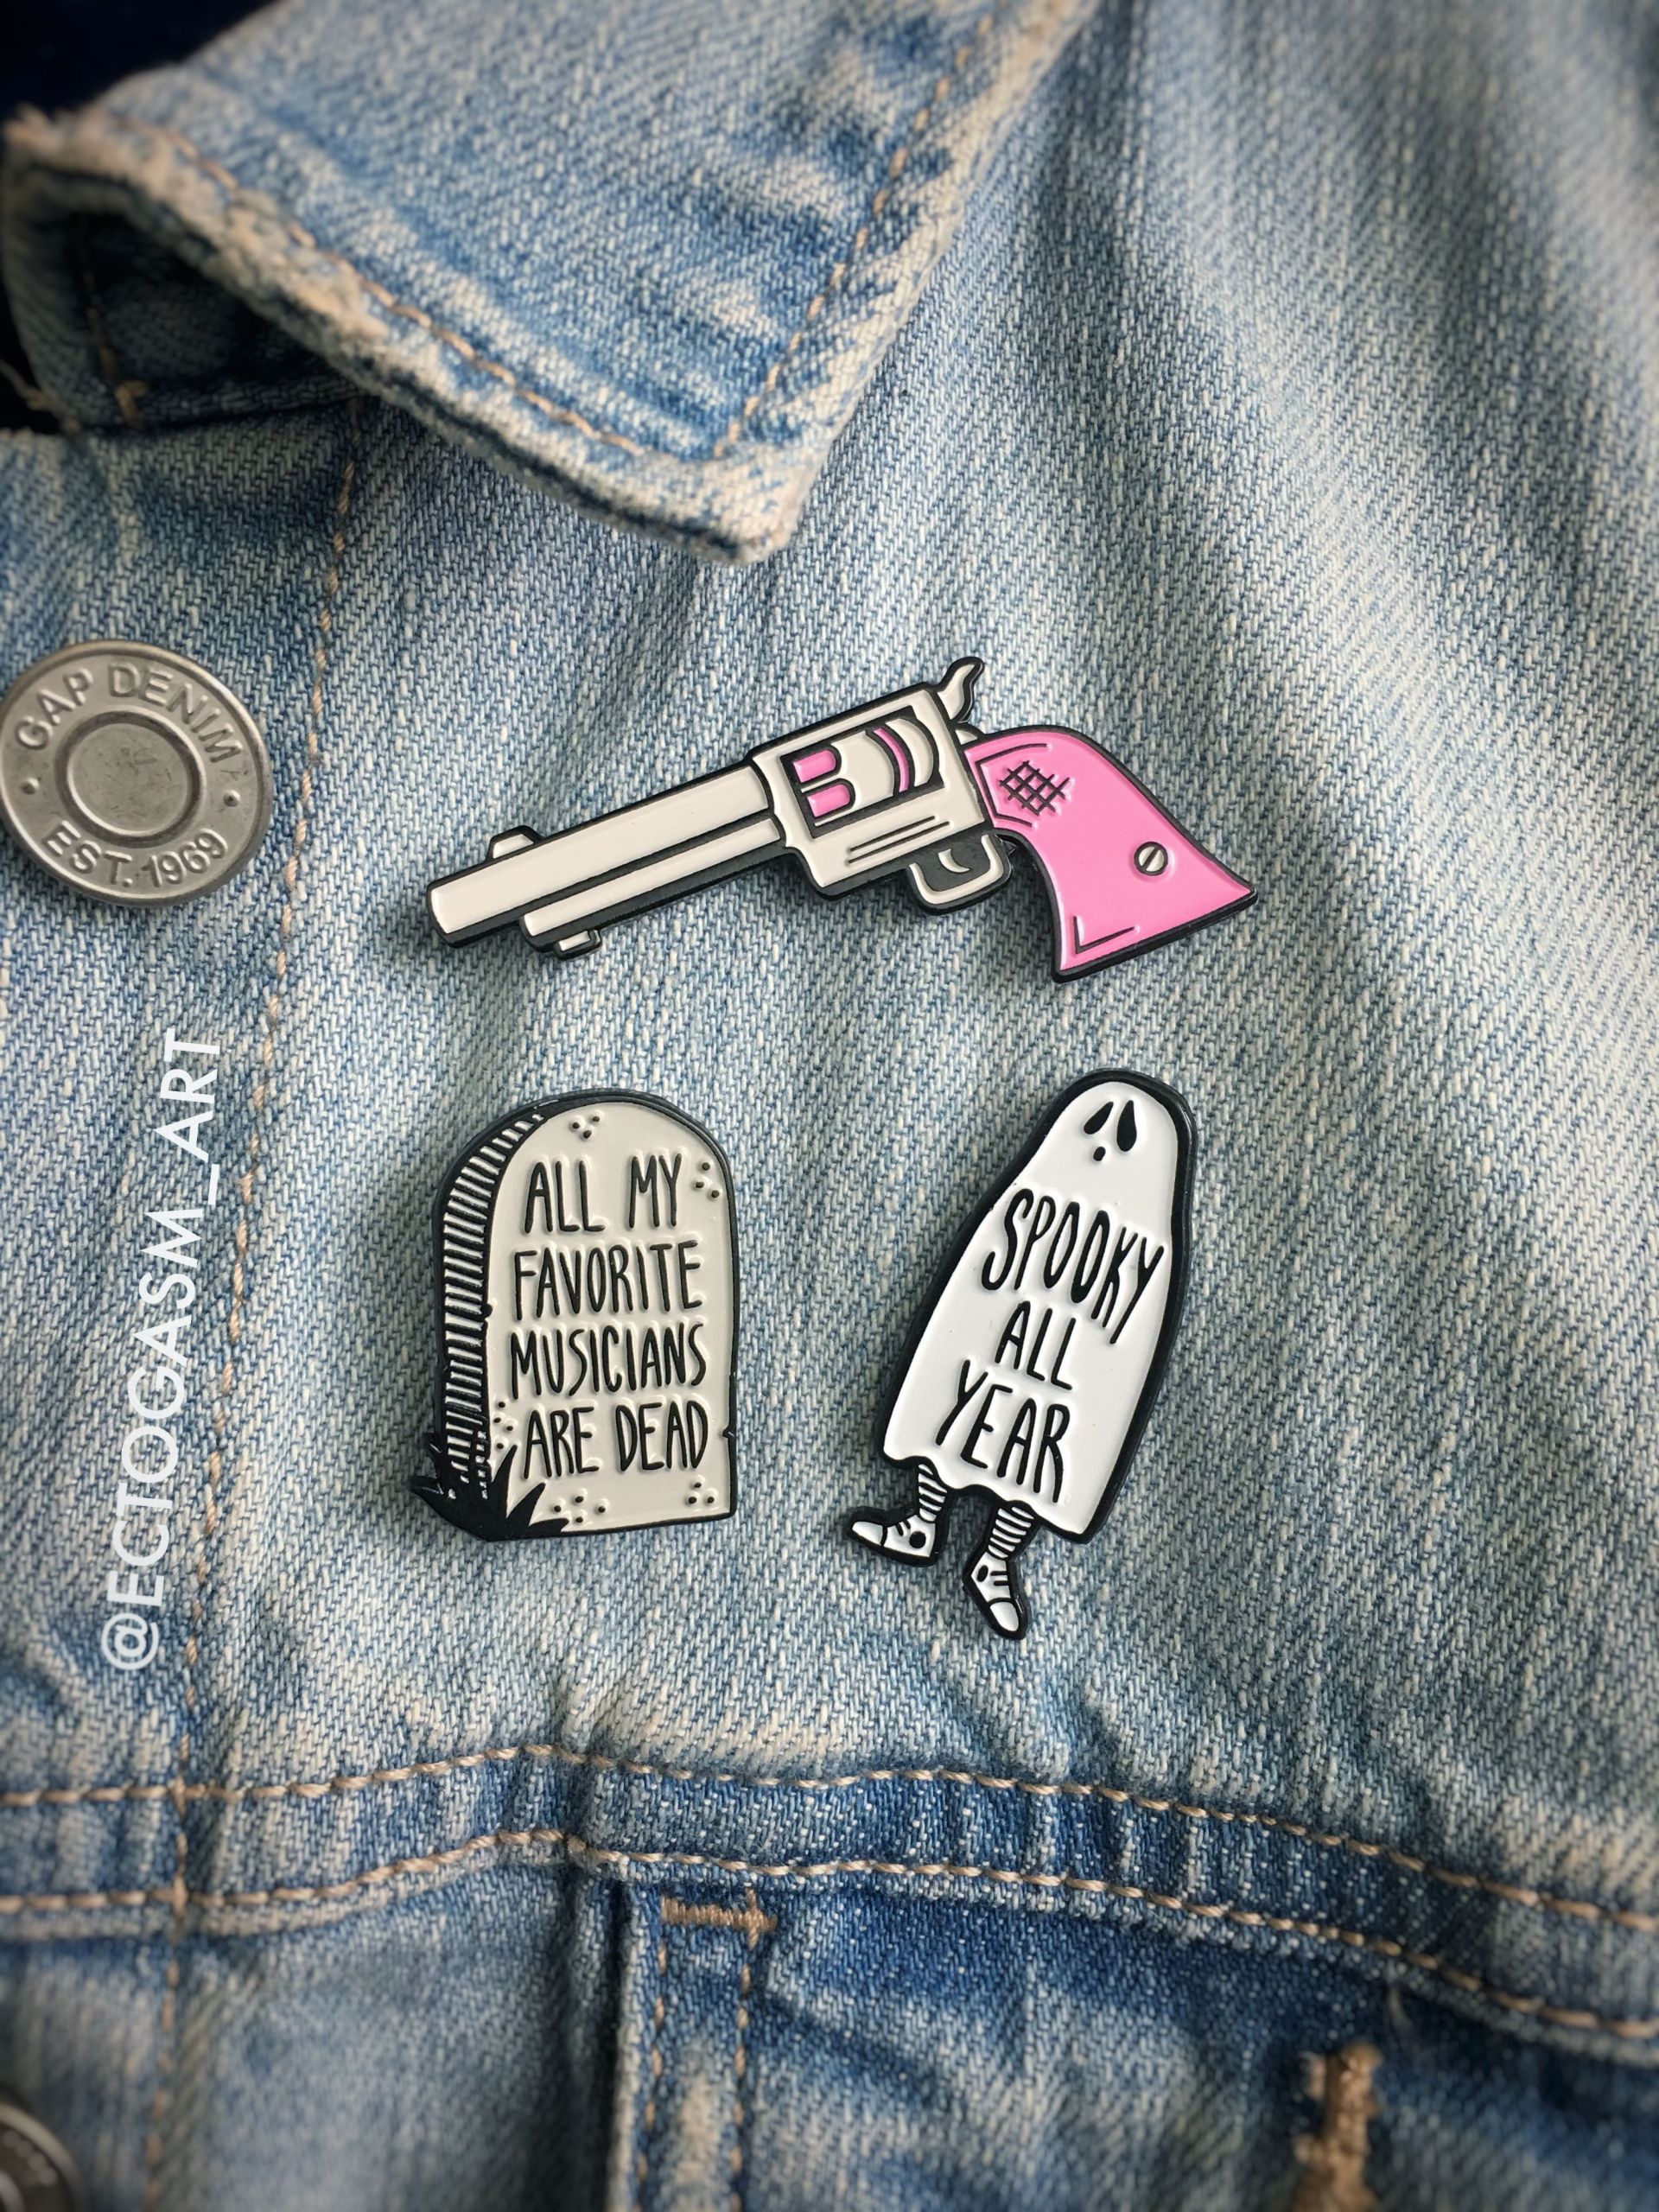 Pins On Denim Jacket
 Creepy cute punk enamel pin collection on a denim jacket